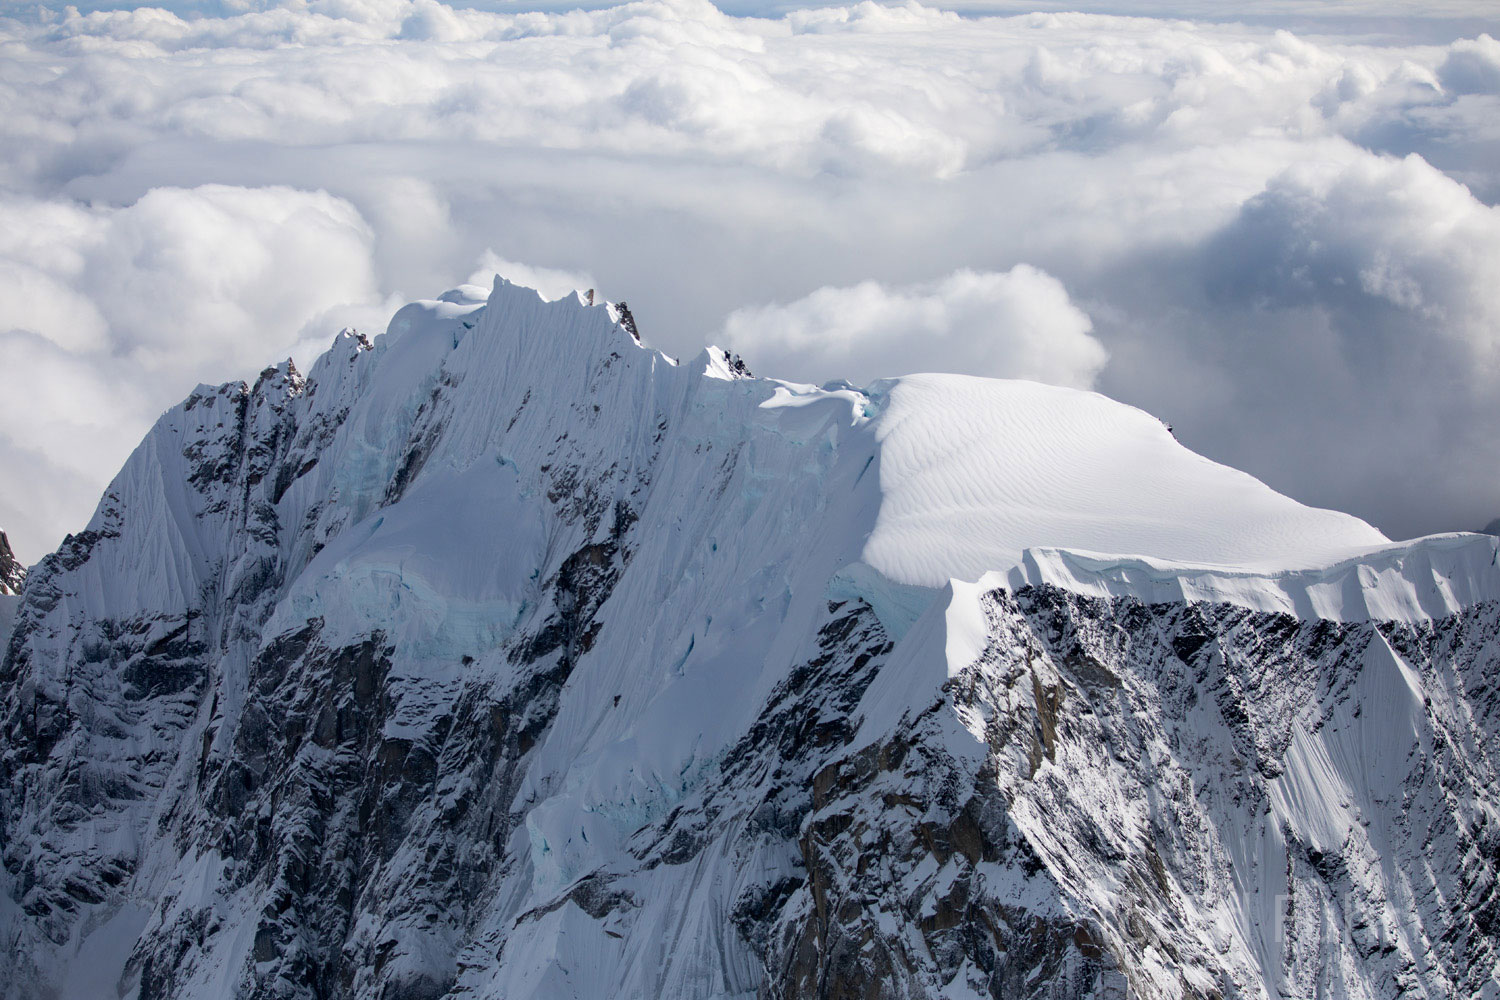 A high mountain ridge guards the entrance to Denali's peaks